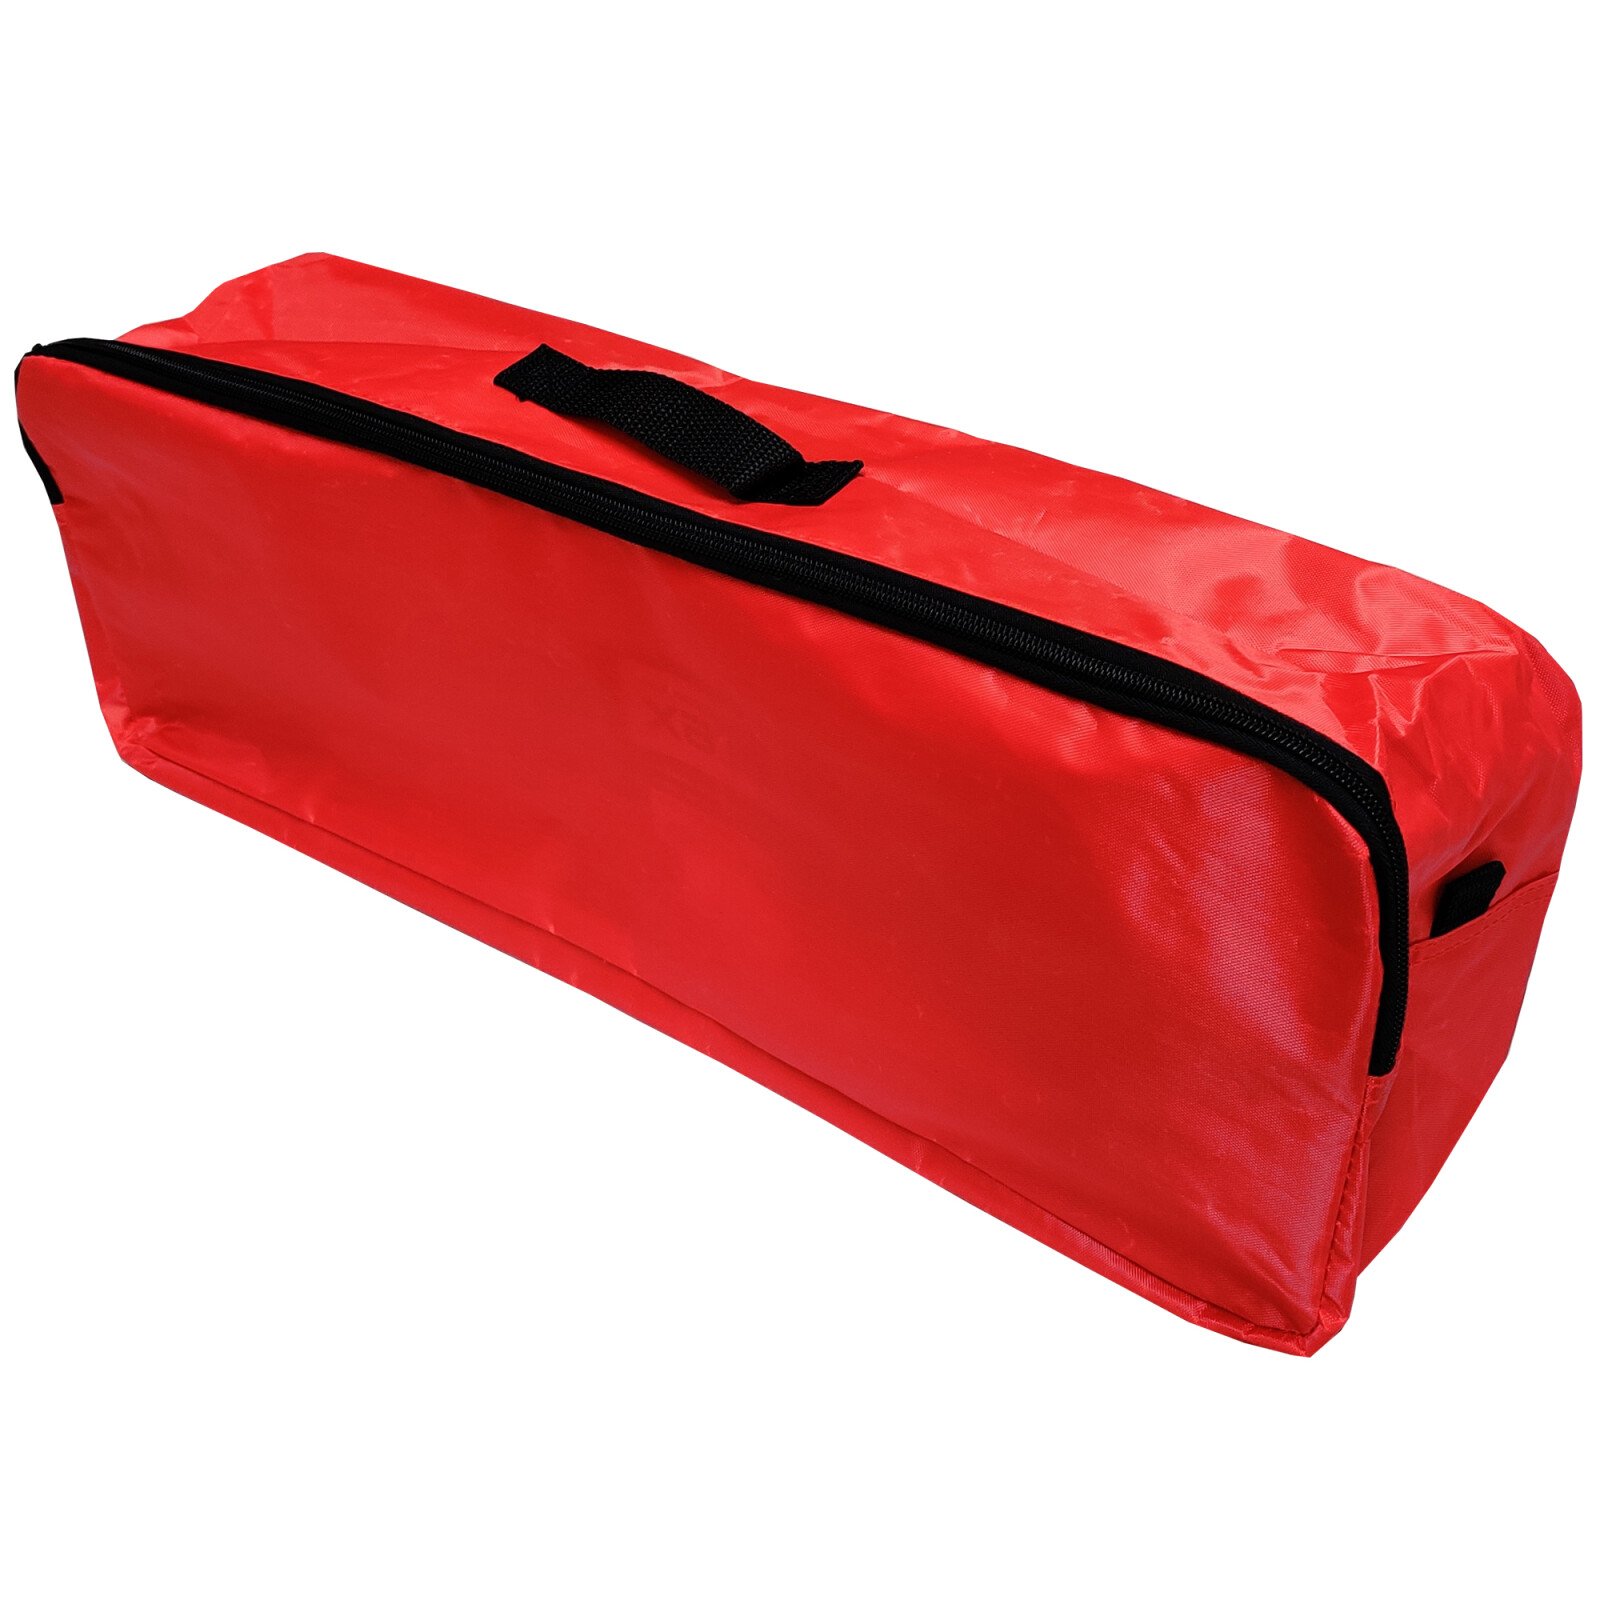 Cridem trunk organizer bag - Red/Black thumb